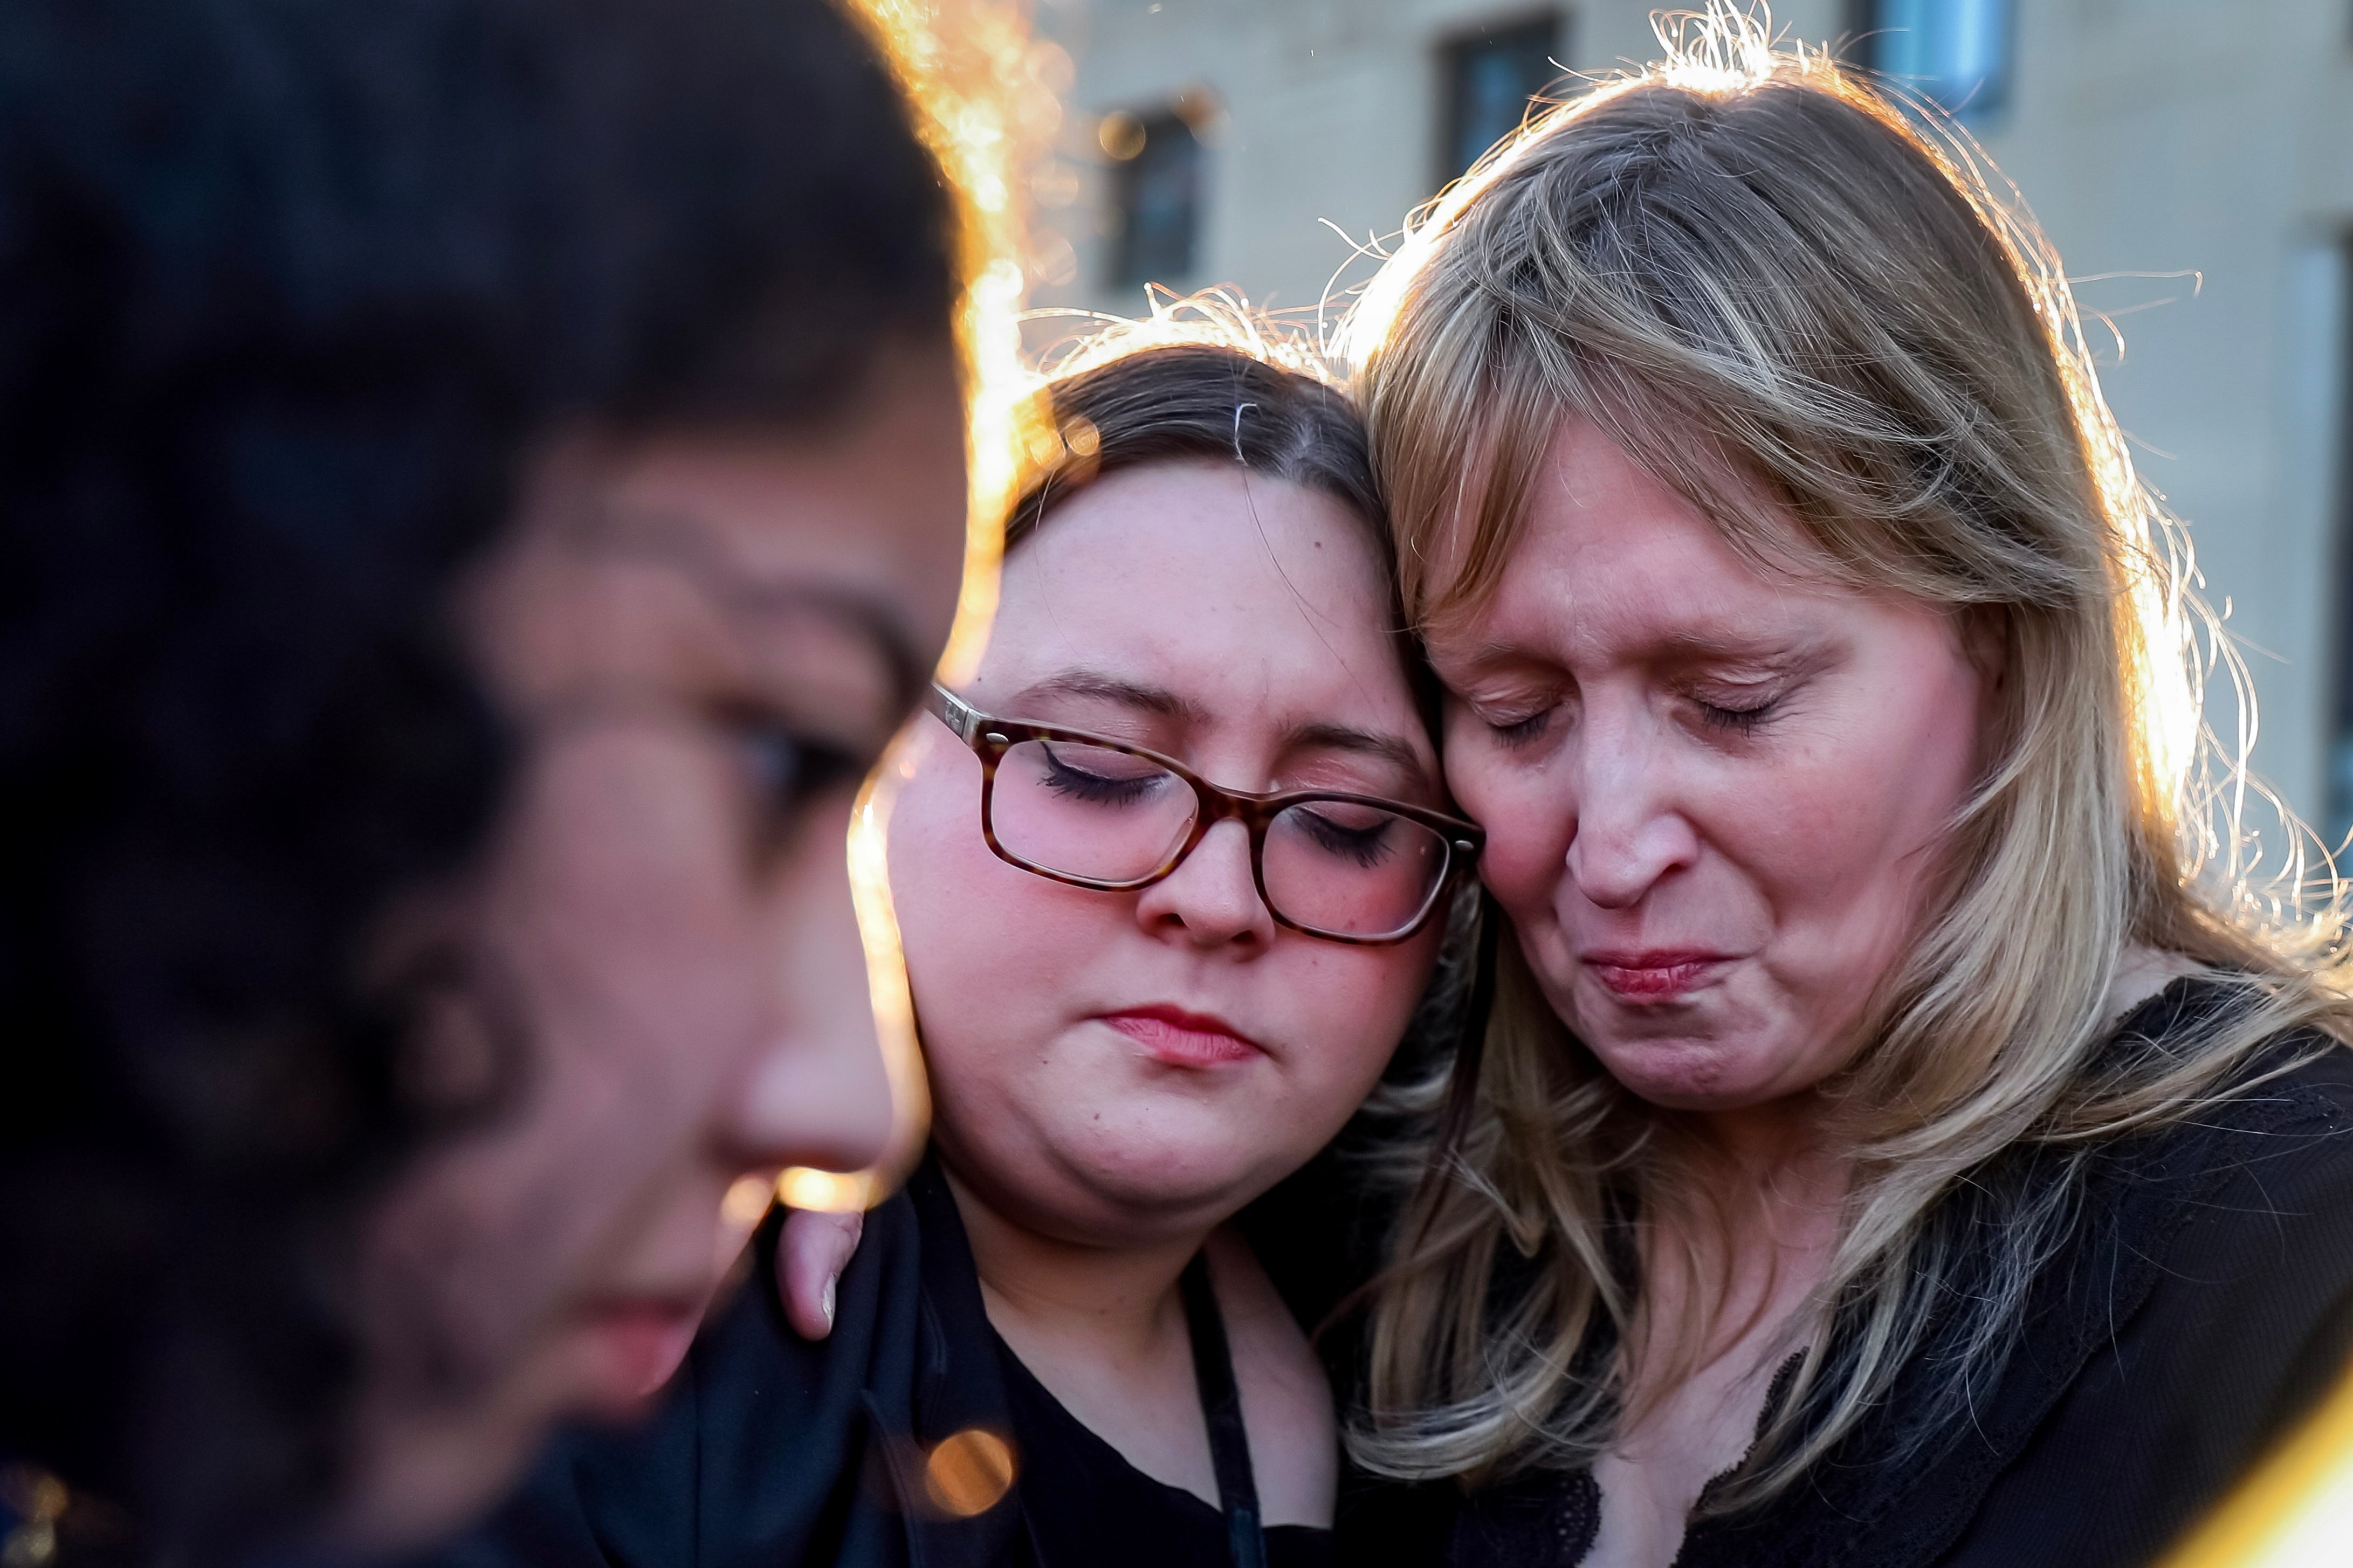 Nashville youth attending school shooting vigil reveal their anger: ‘We ...